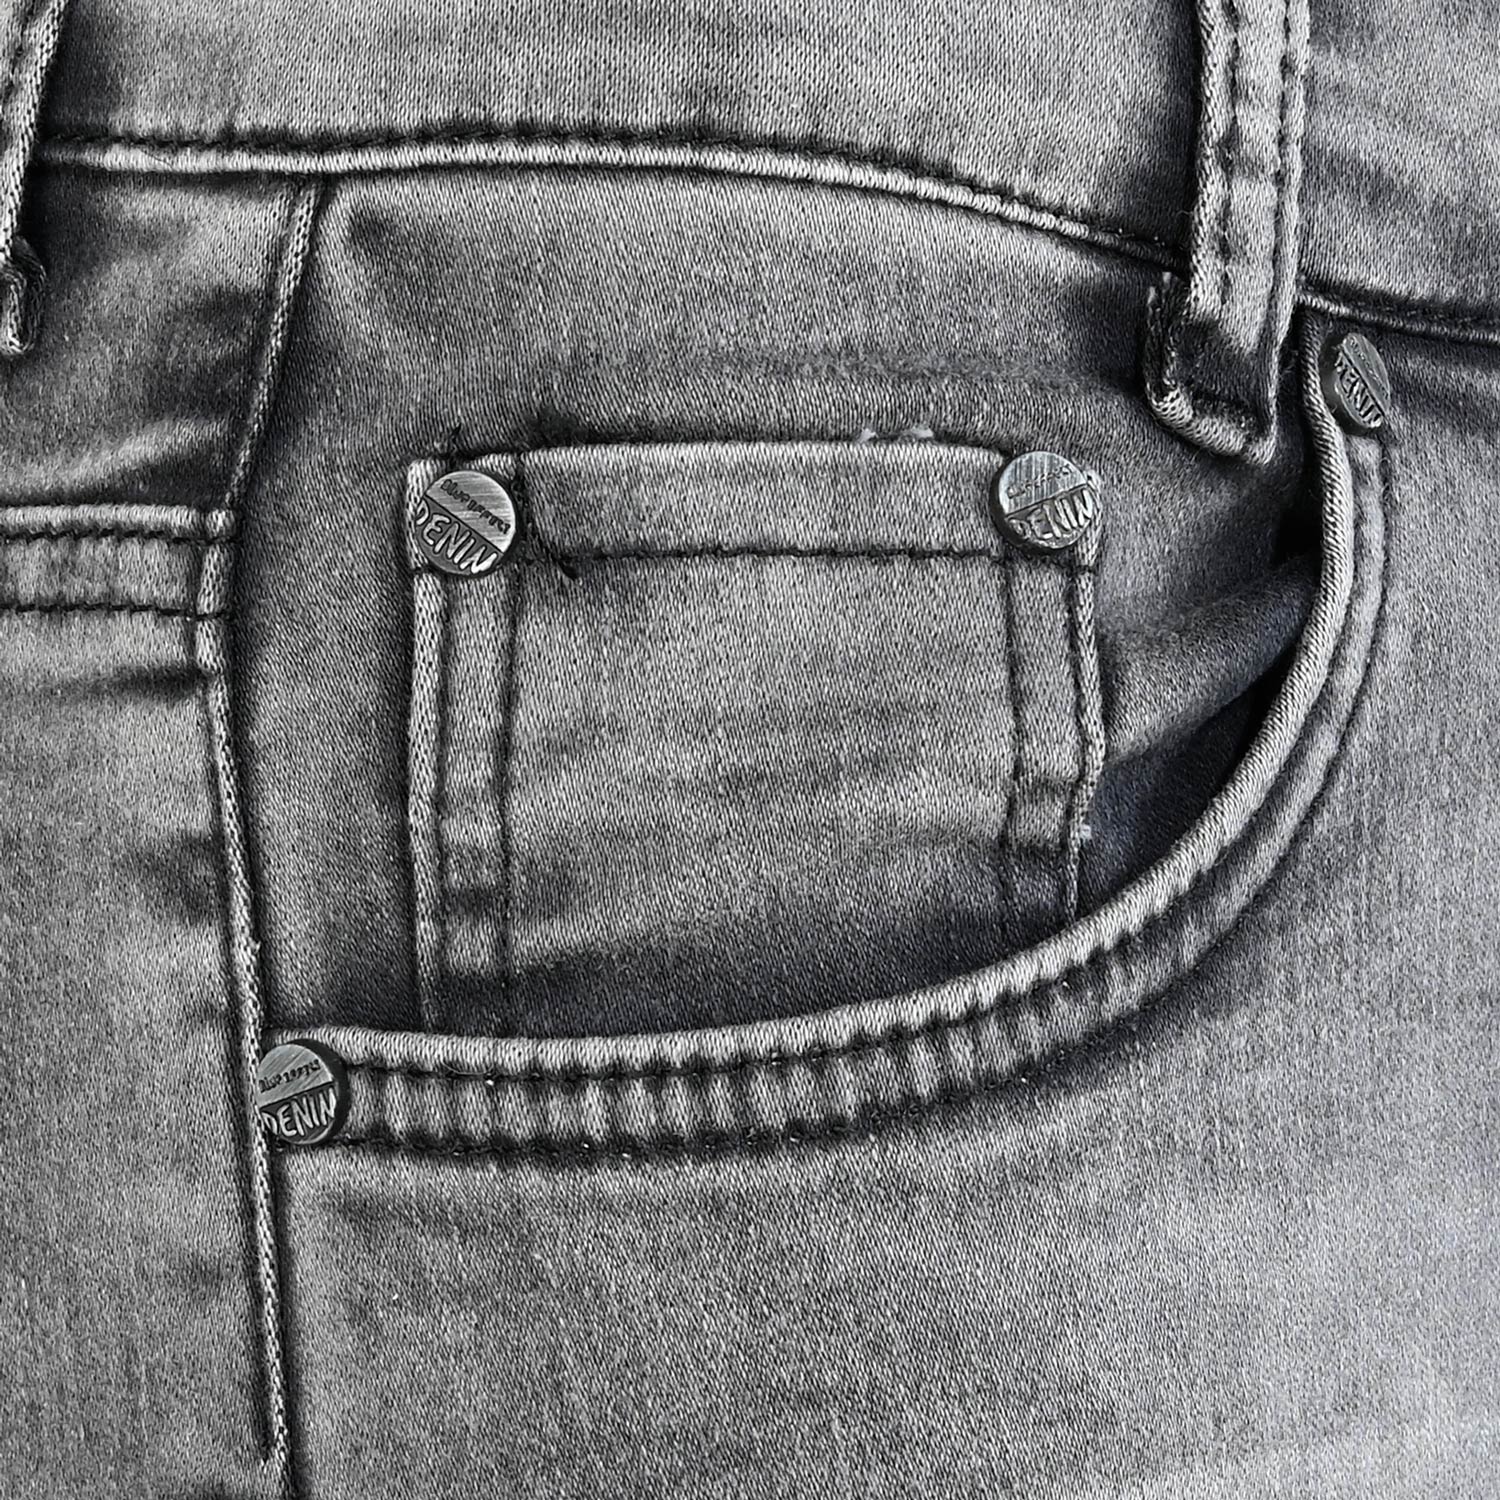 2726-NOS Boy Jeans Relaxed Fit, Ultrastretch, verfügbar in Slim,Normal